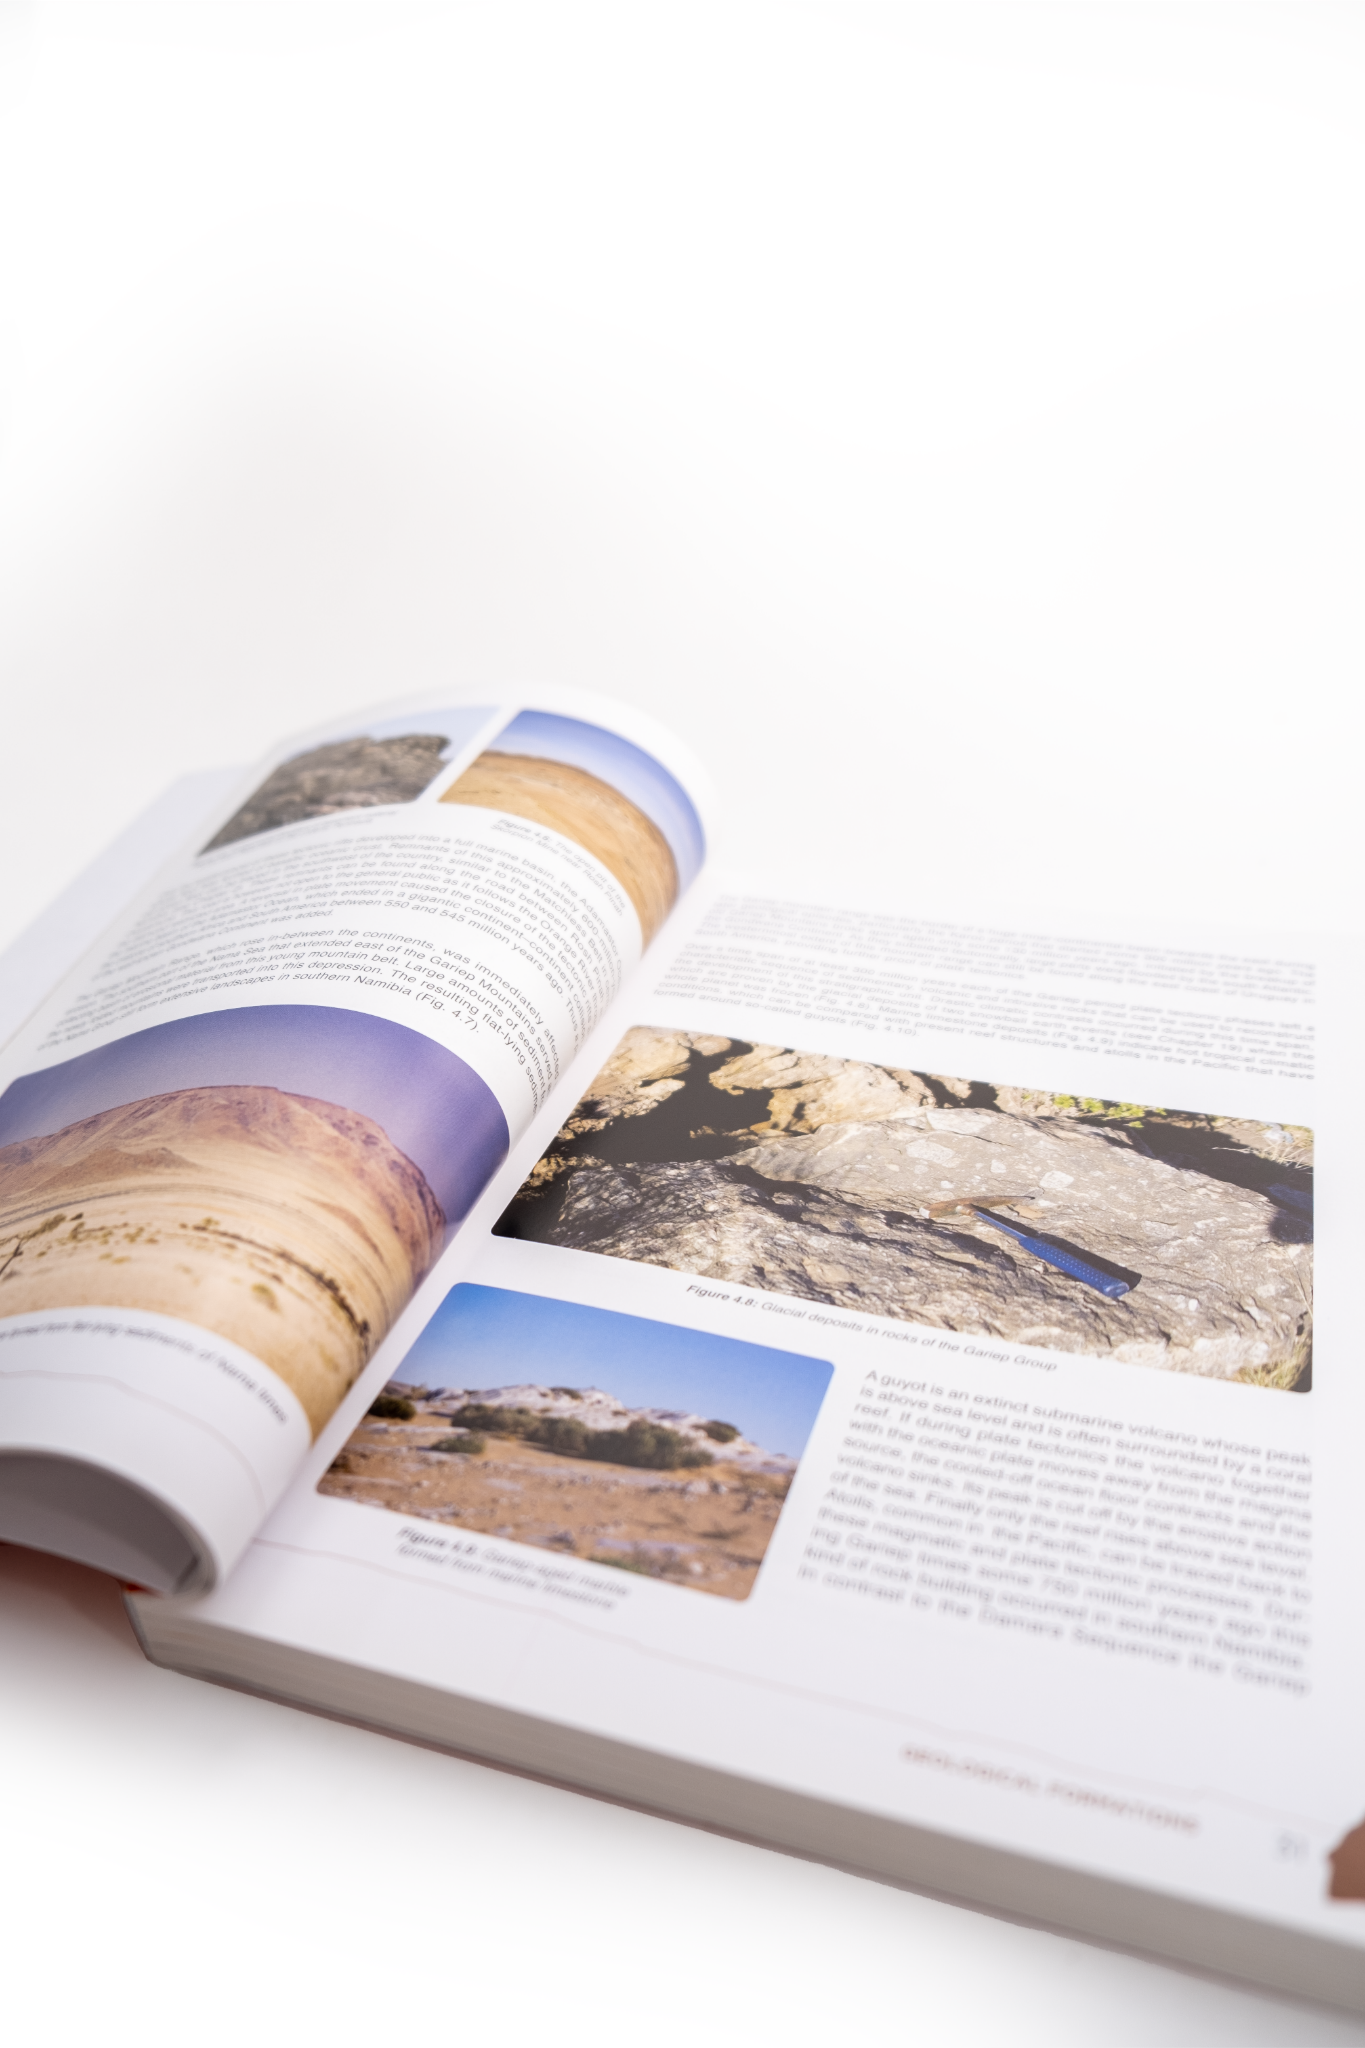 Namibia Geological Wonderland Book - English